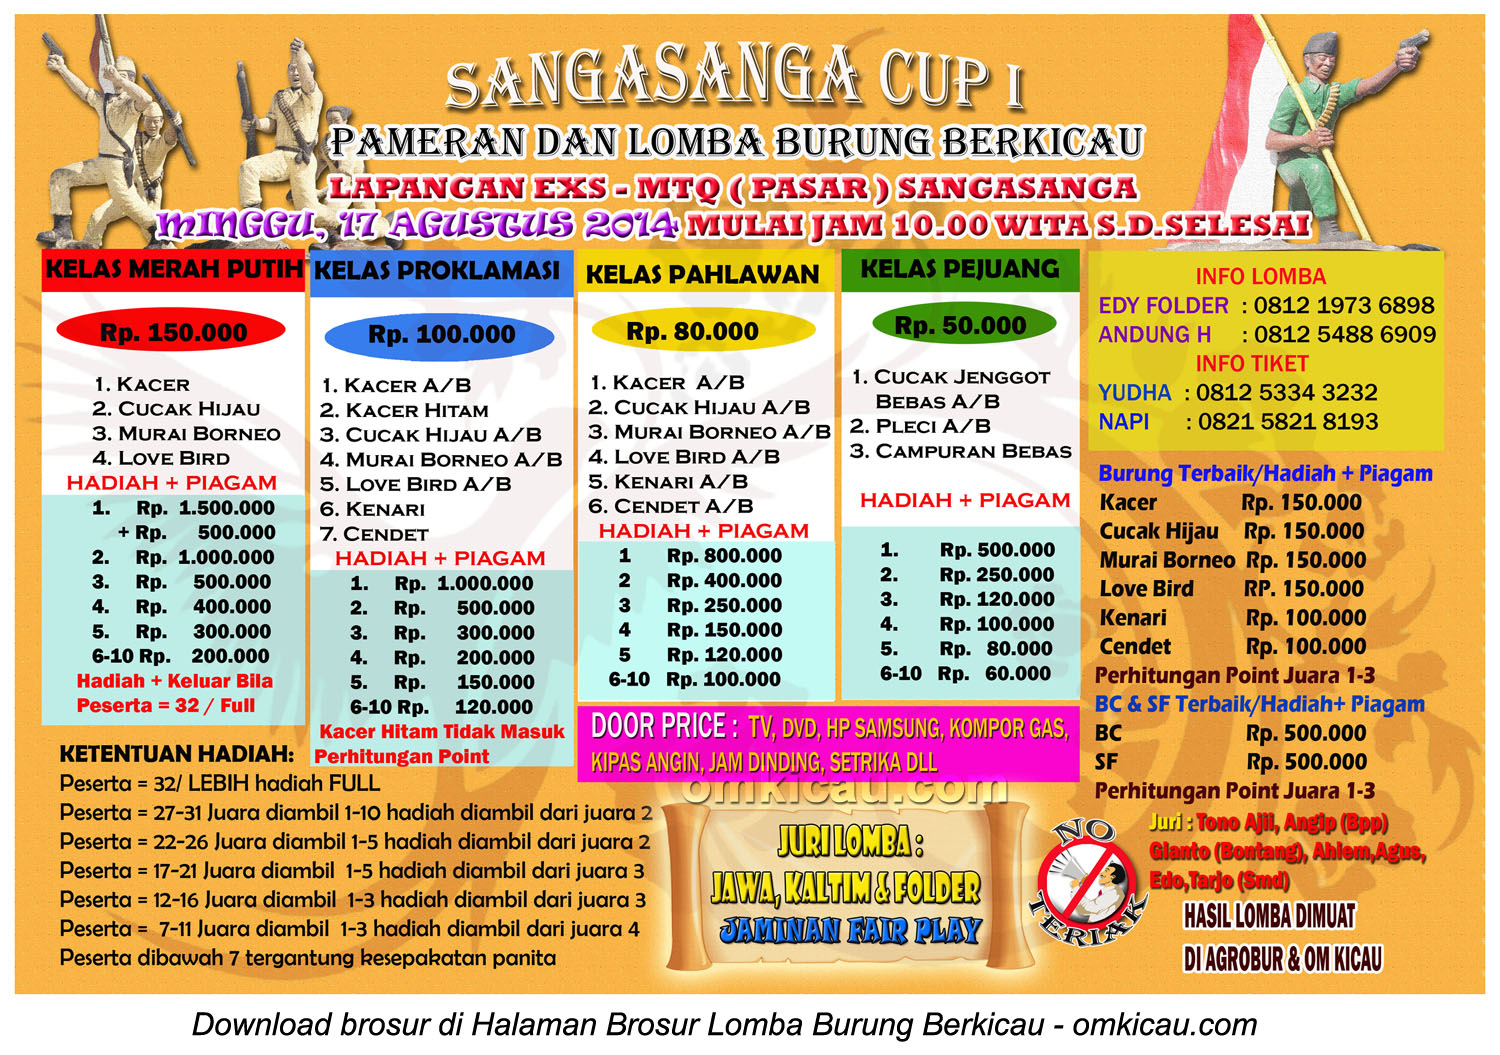 Brosur Lomba Burung Berkicau SangaSanga Cup I, Sanga-Sanga, 17 Agustus 2014